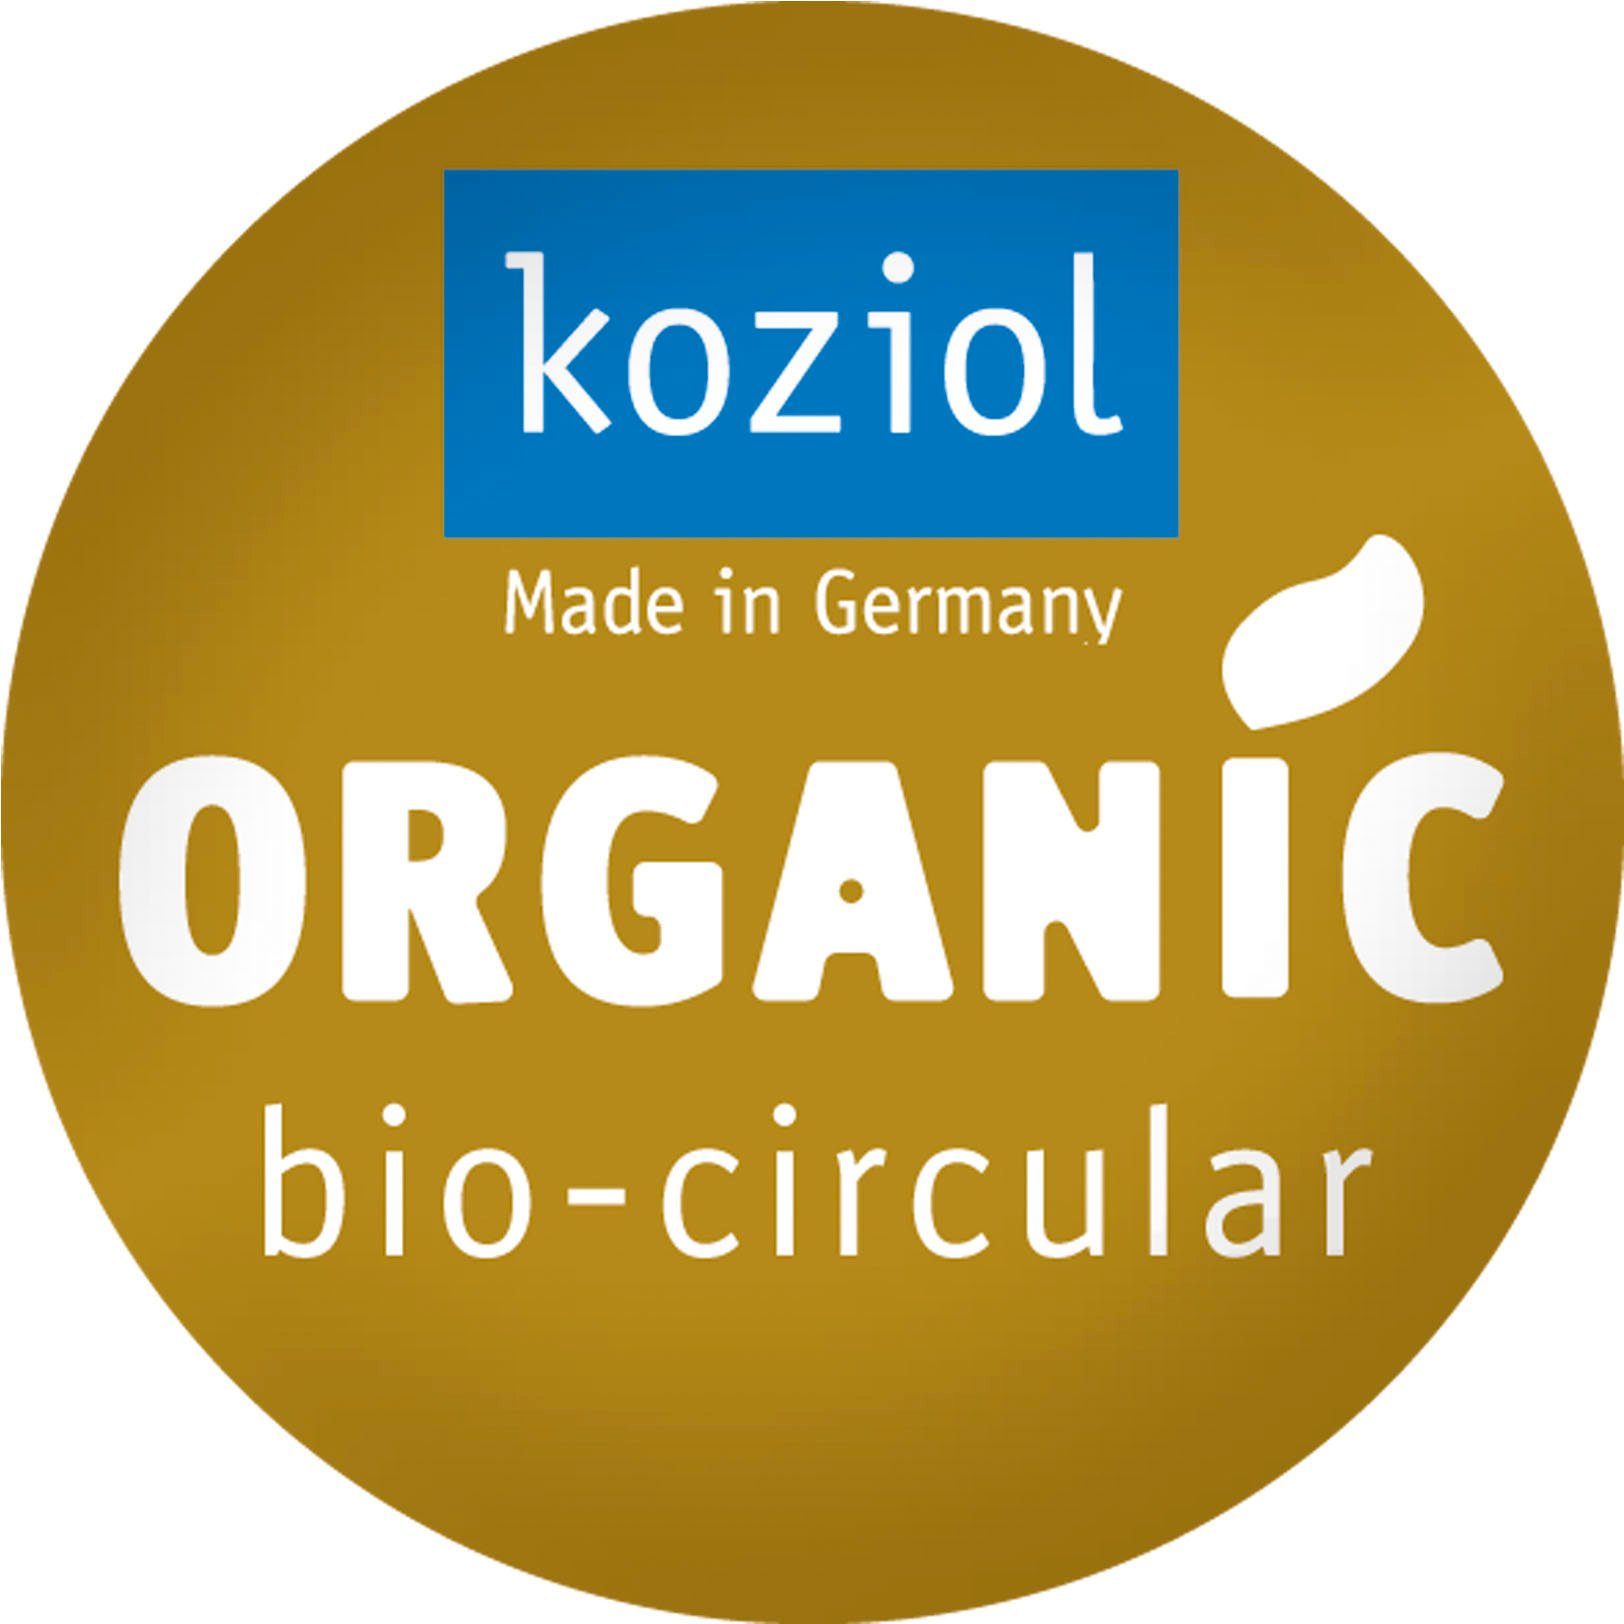 KOZIOL Teller neutral, Kunststoff, Germany. PLATE, in 220 CO² St), mm tief, CLUB Made Biozirkulärer (4 Blau